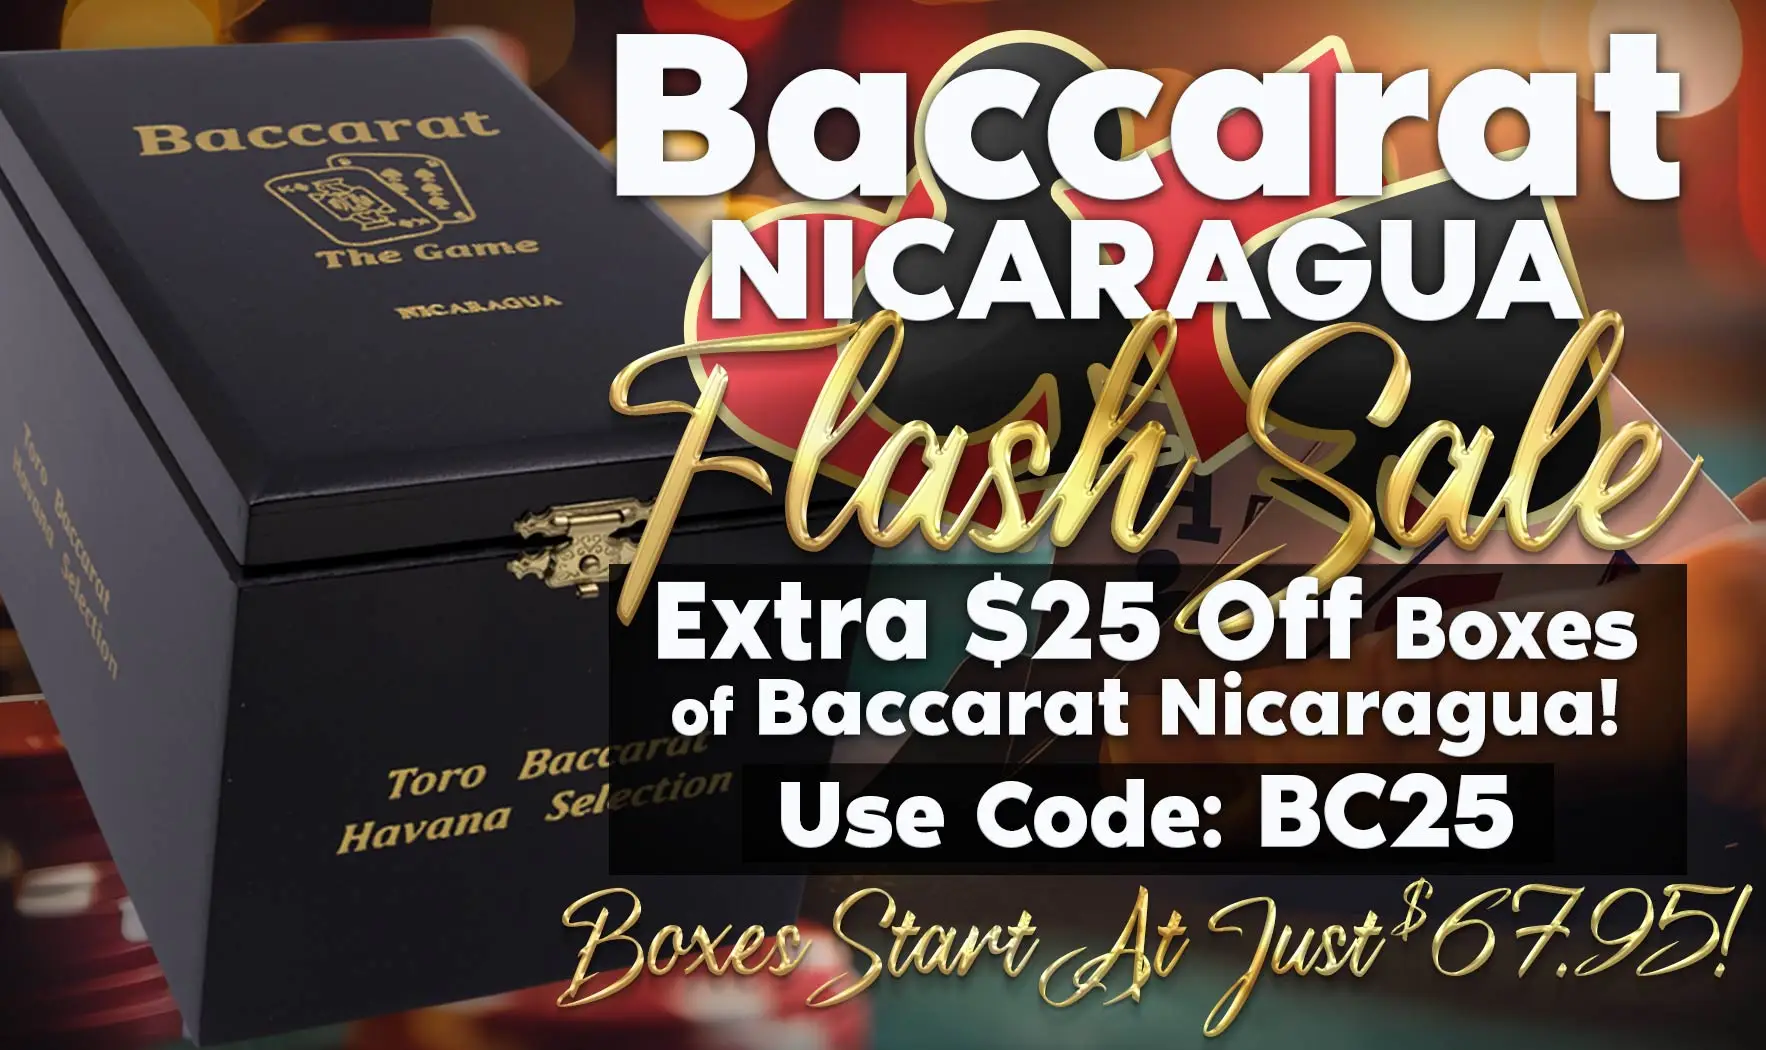 Baccarat Flash Sale